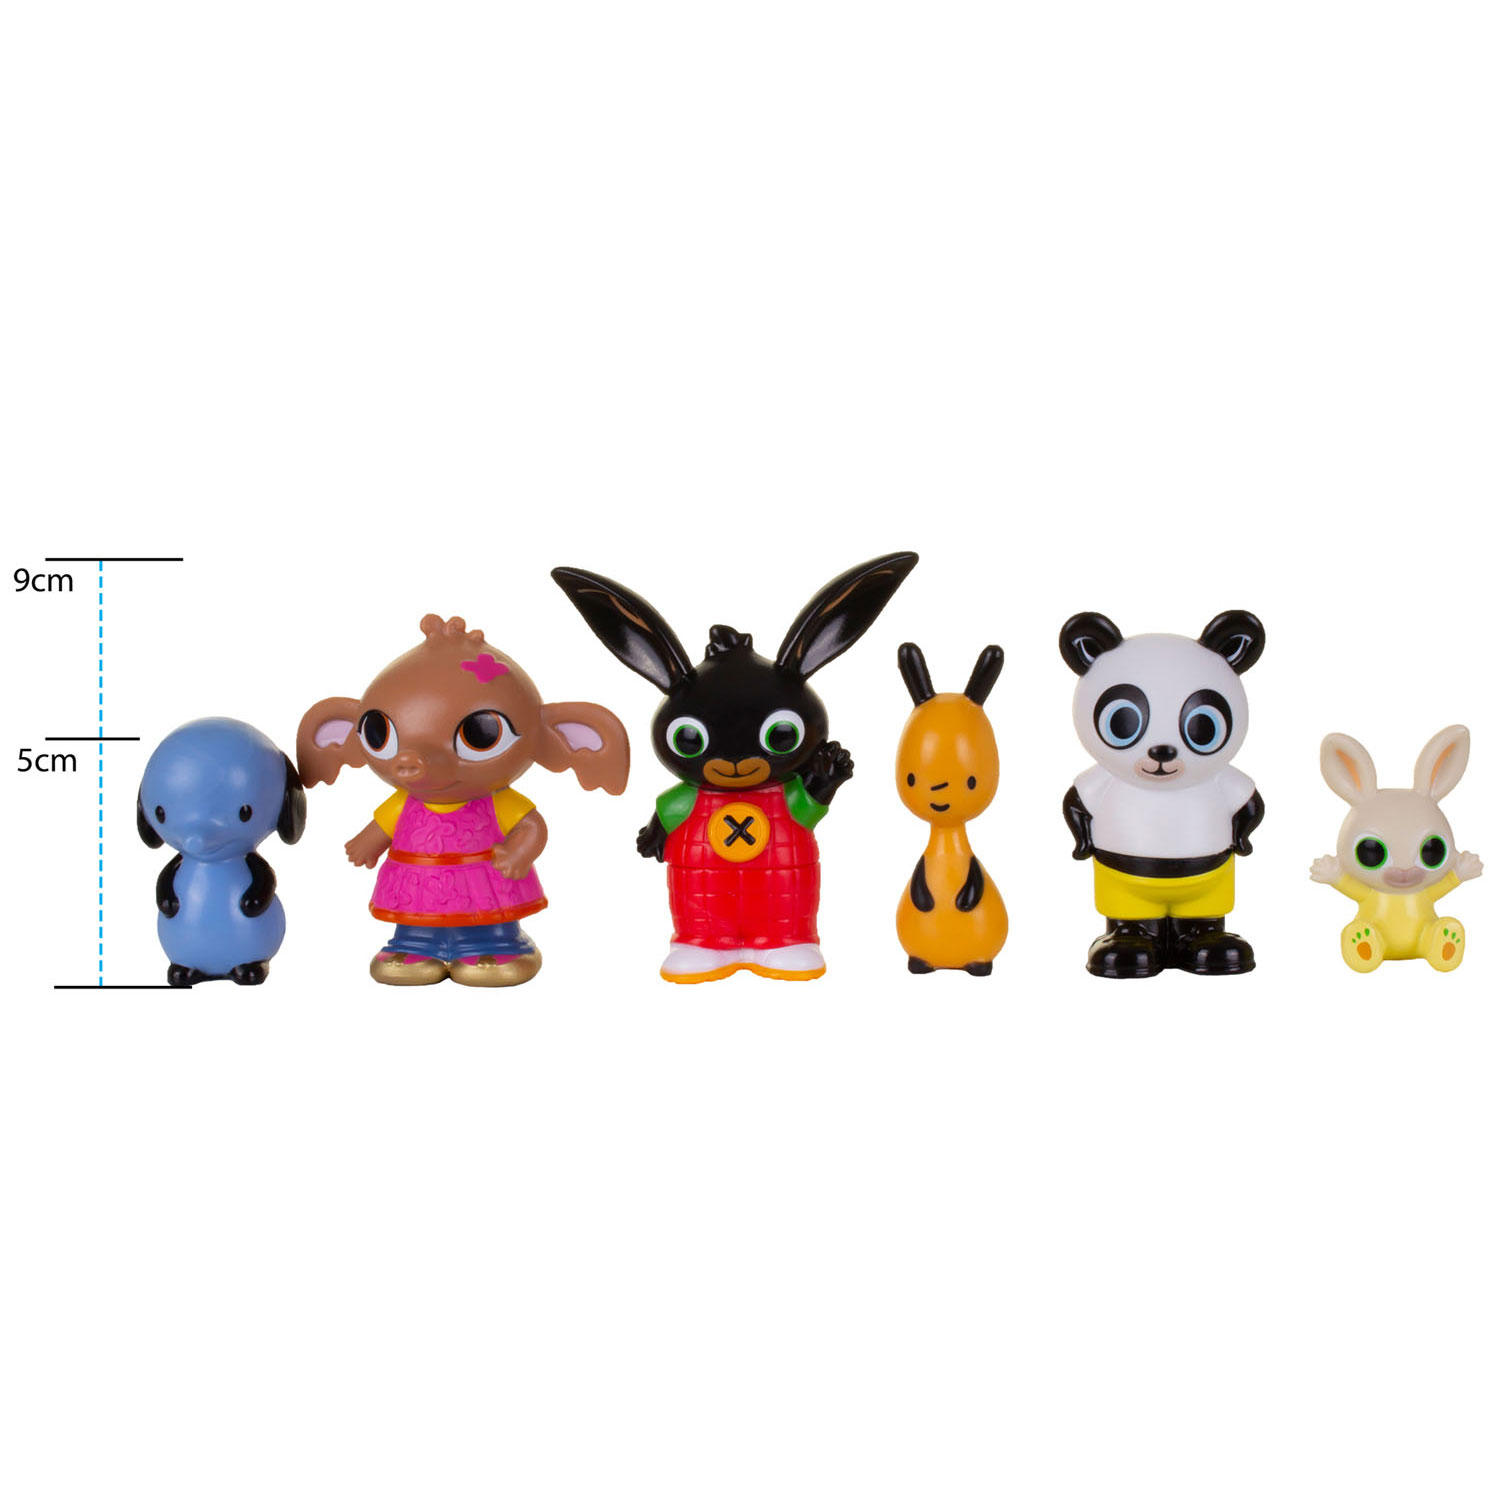 Valise Bing avec 6 figurines